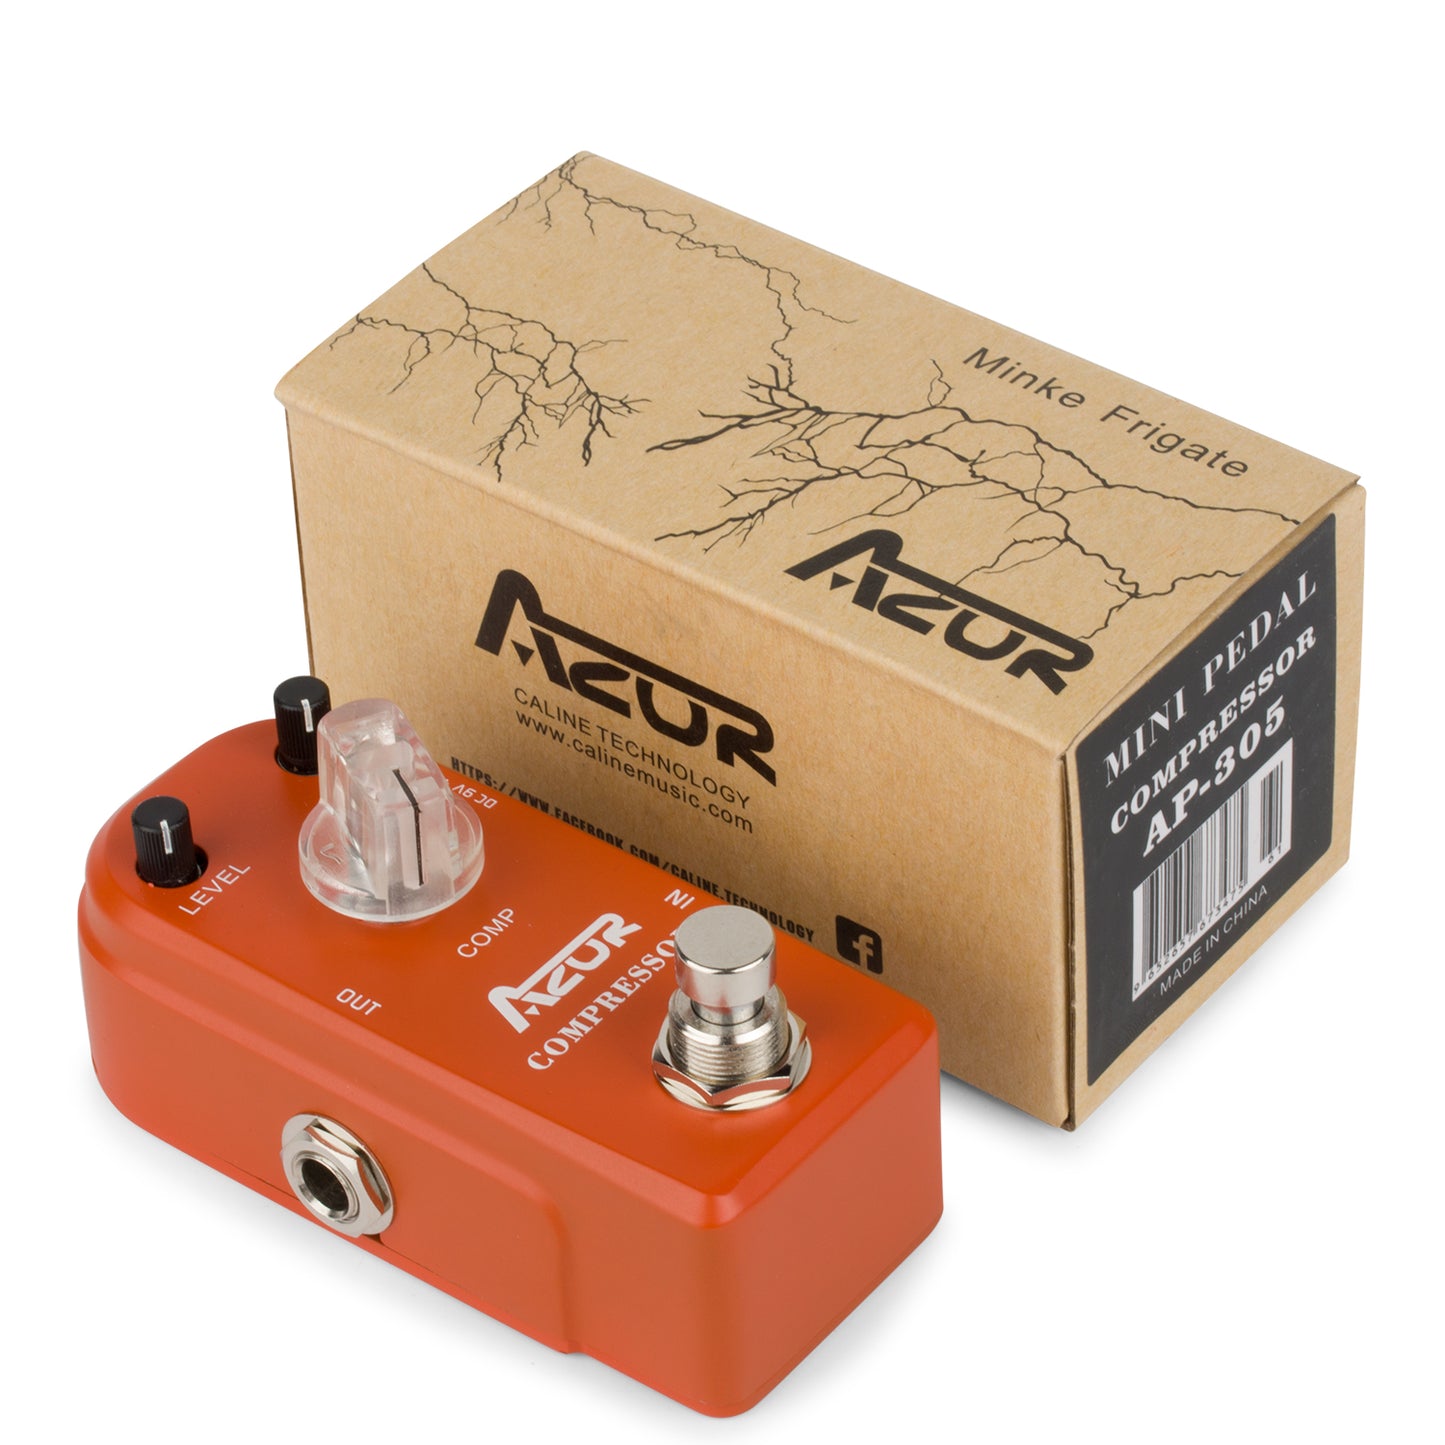 AZOR AP-305 Mini Compressor Guitar Effects Pedal